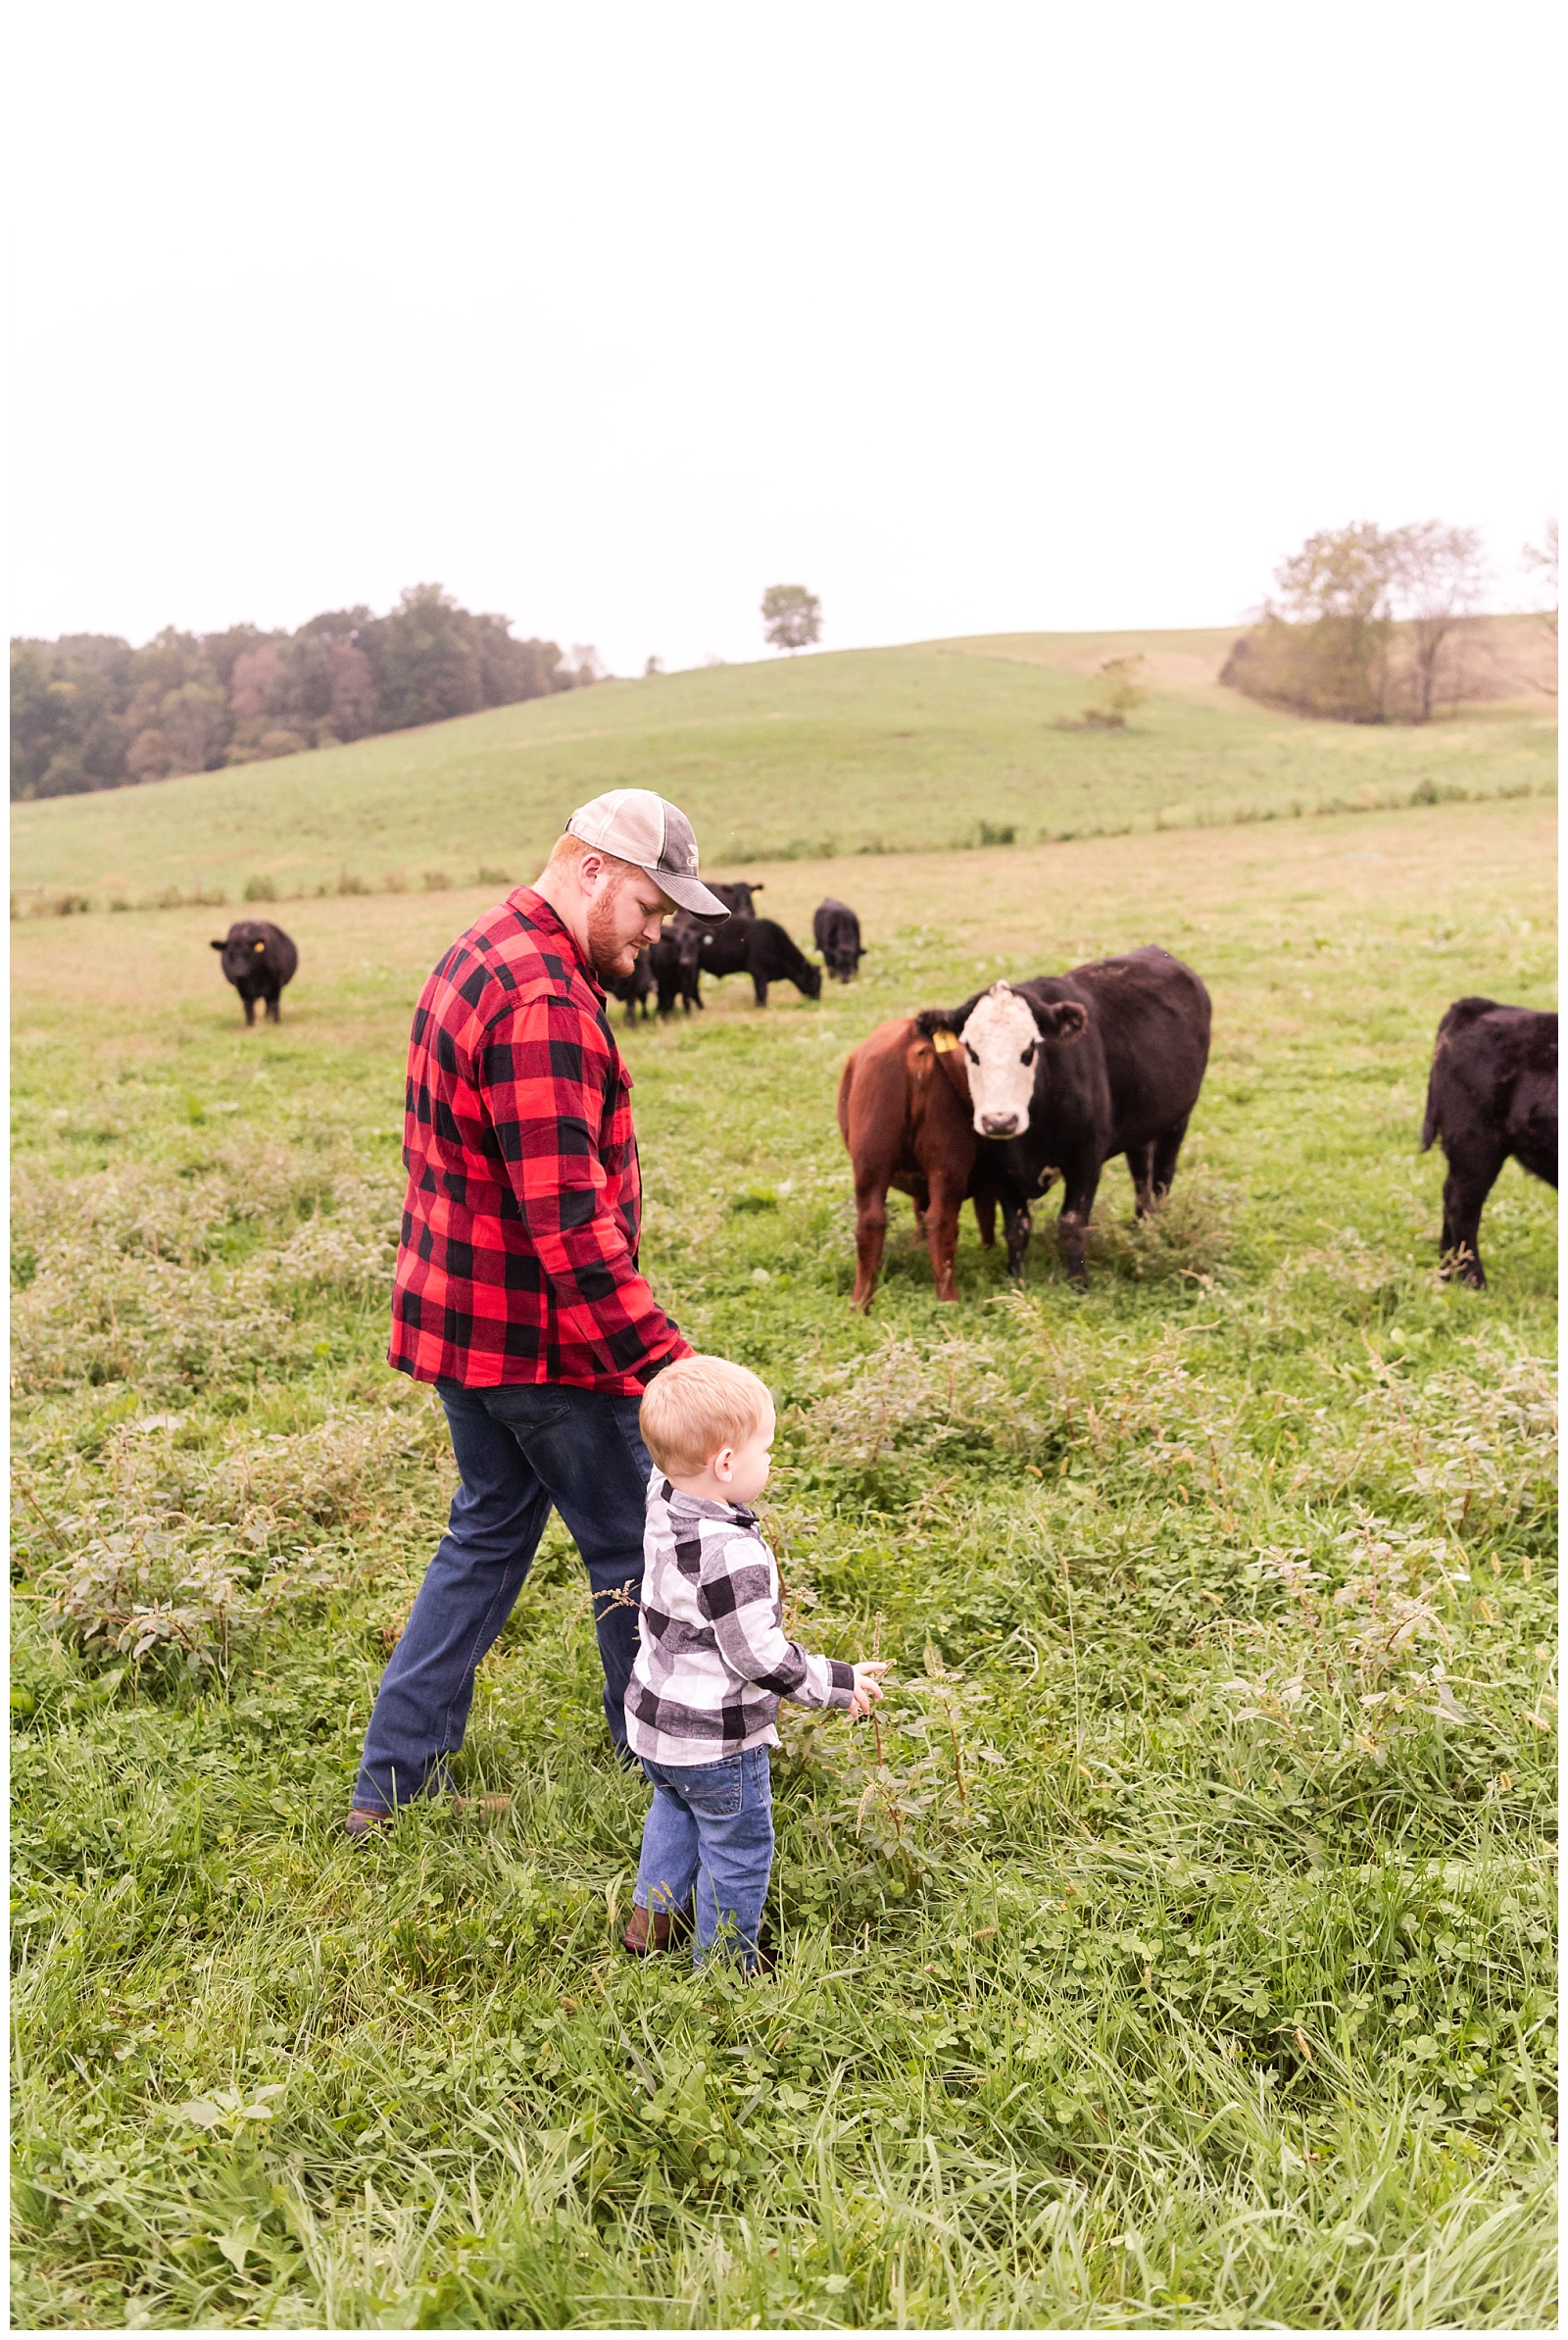 Family, farm, cattle, photographer, ohio, cattle farm, kids, children,